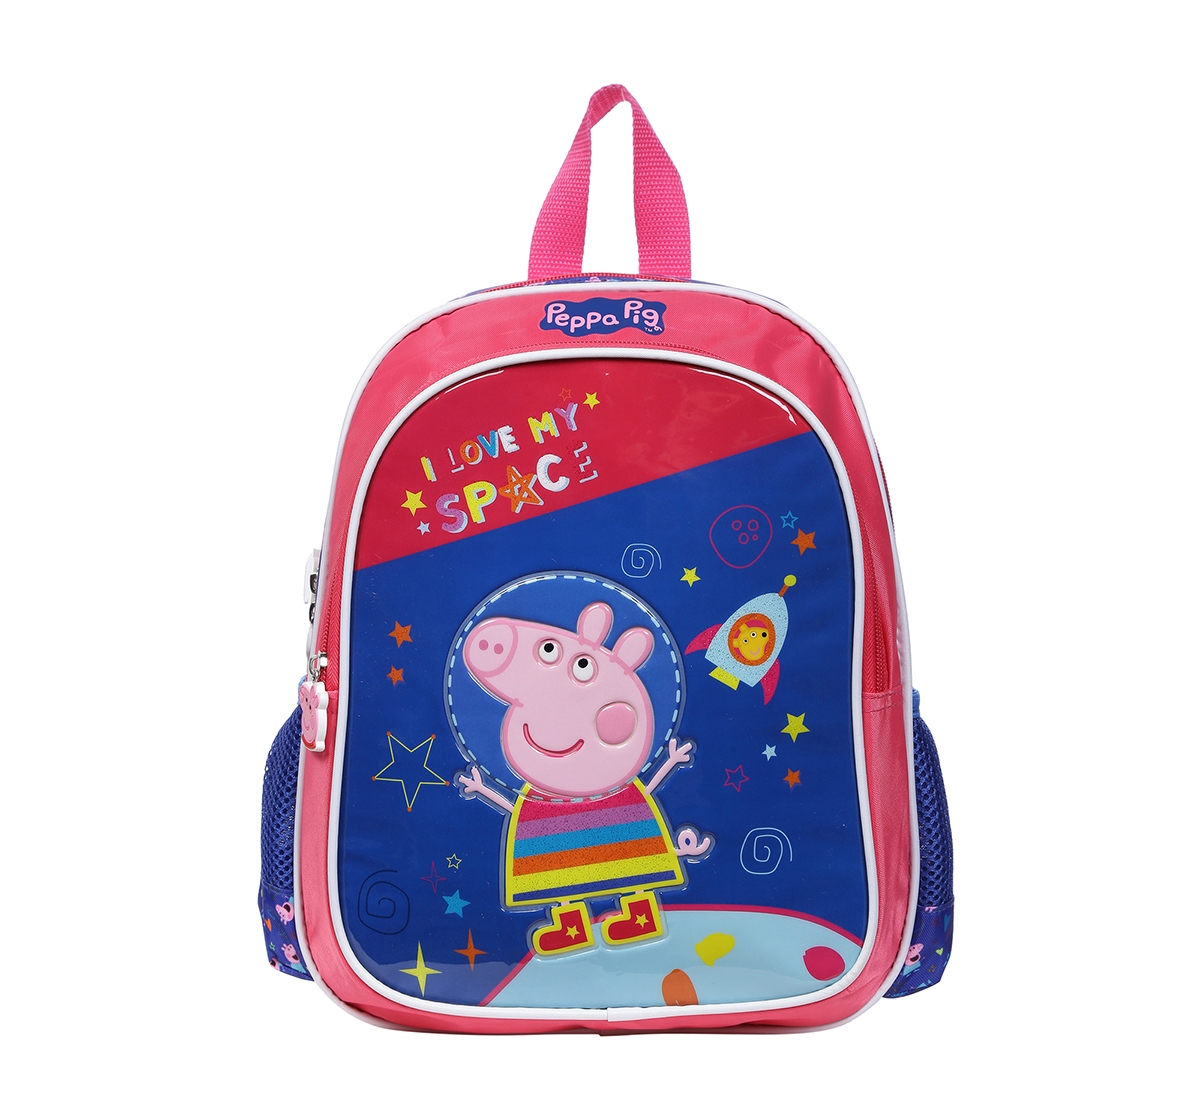 Peppa Pig |  Peppa Pig I Love My Space 12 Backpack Bags for Kids age 3Y+  0